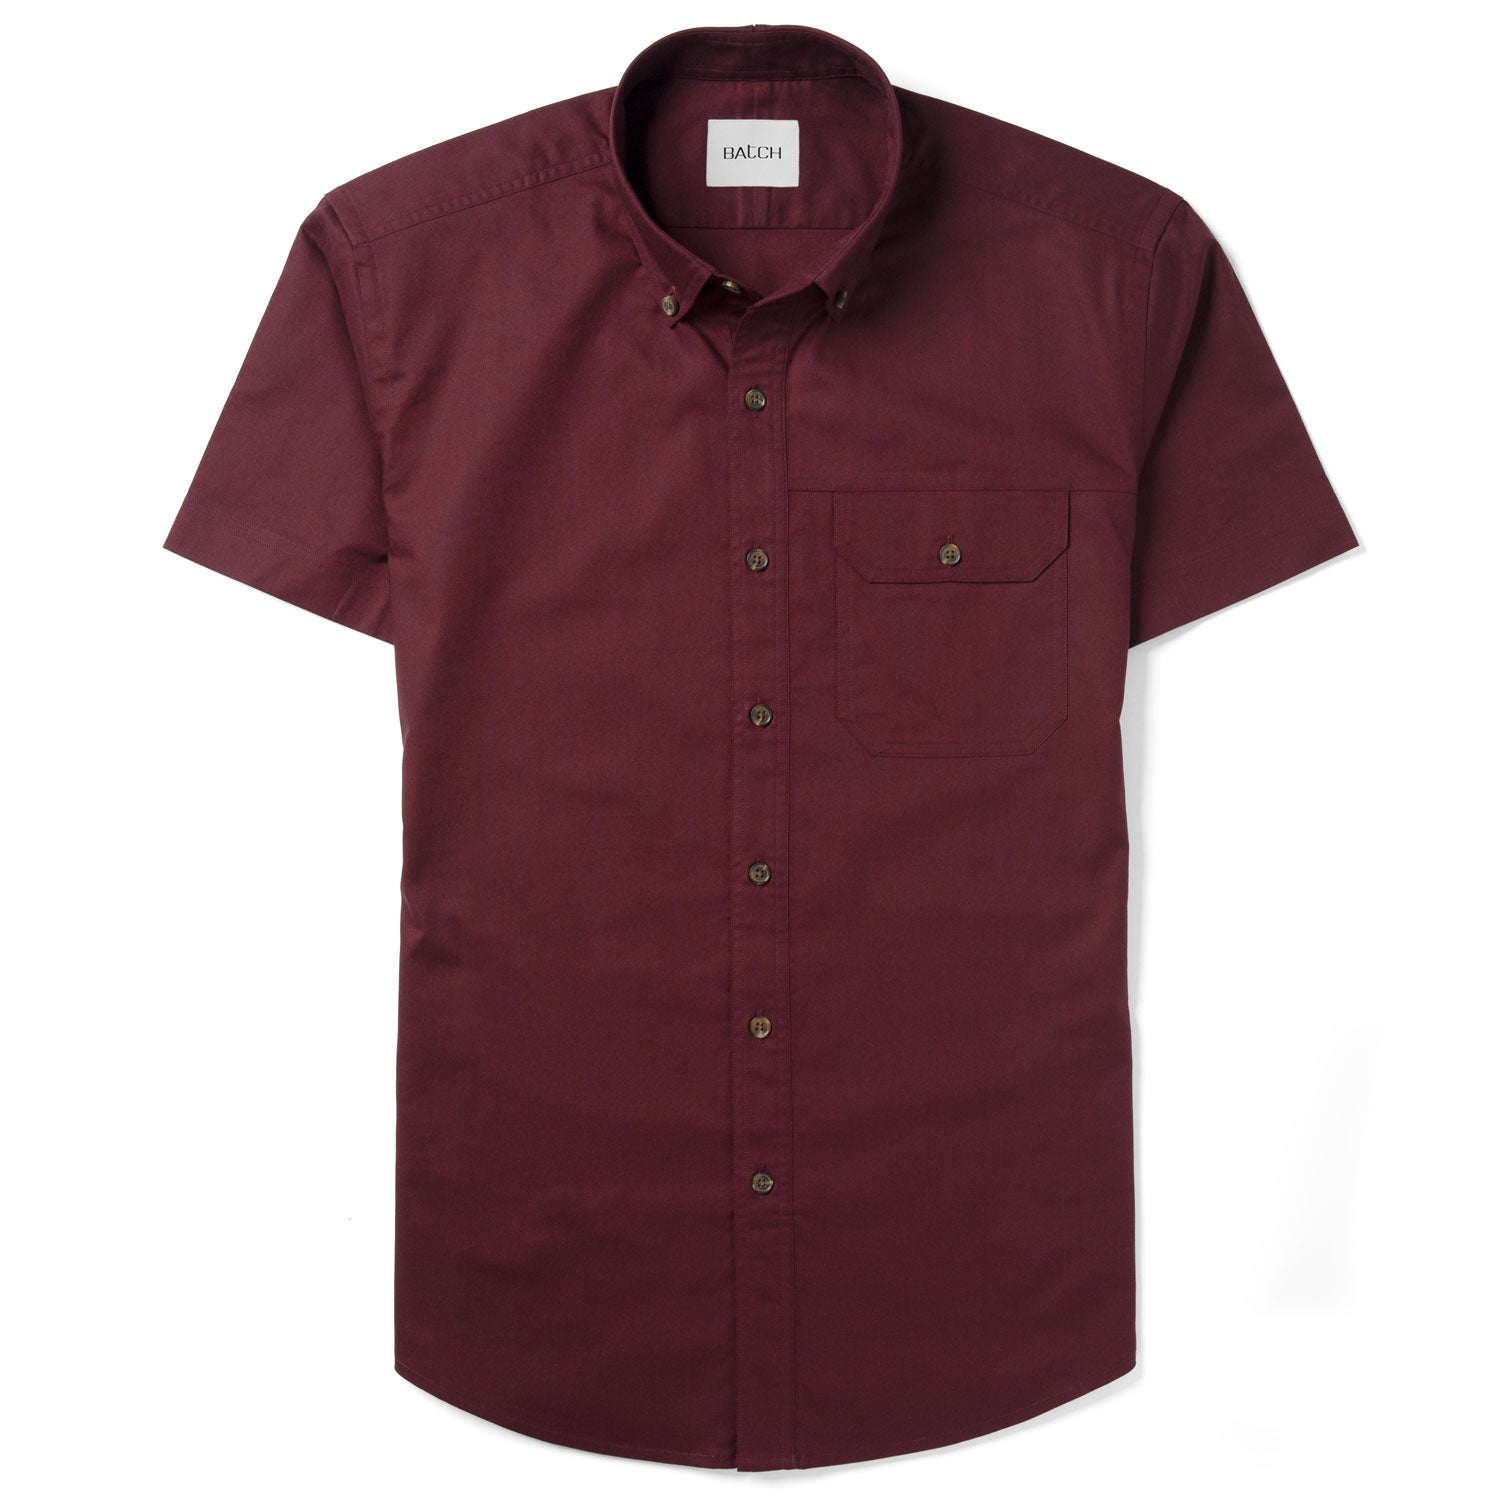 Builder Short Sleeve Casual Shirt – Burgundy Cotton Oxford